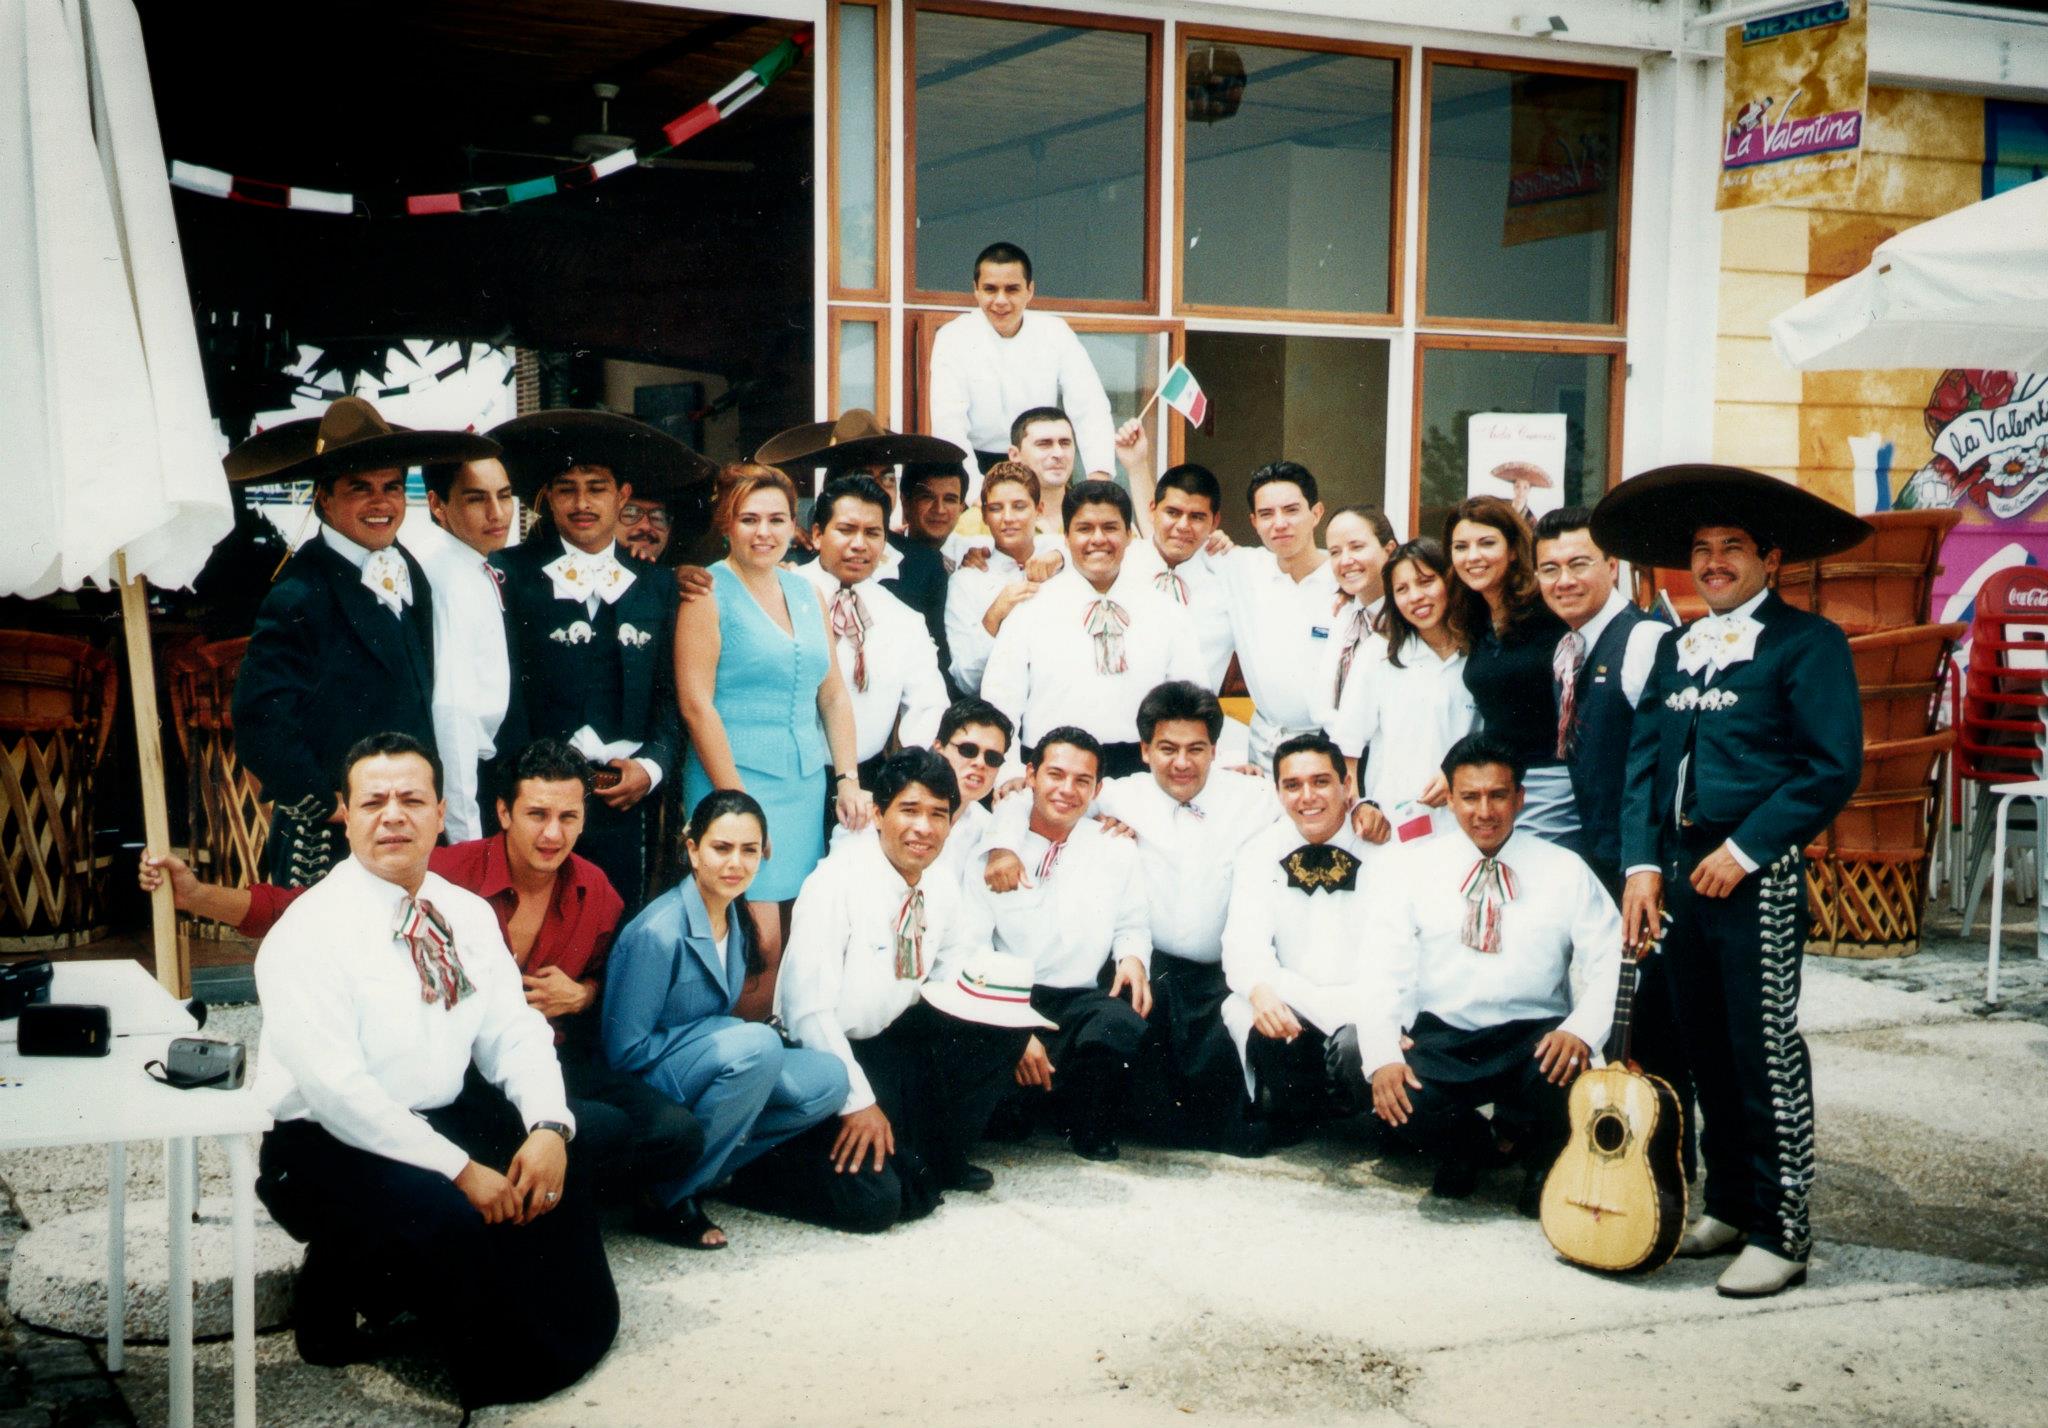 César Corona with the team of the Mexican restaurant at Expo 1998 Lisbon